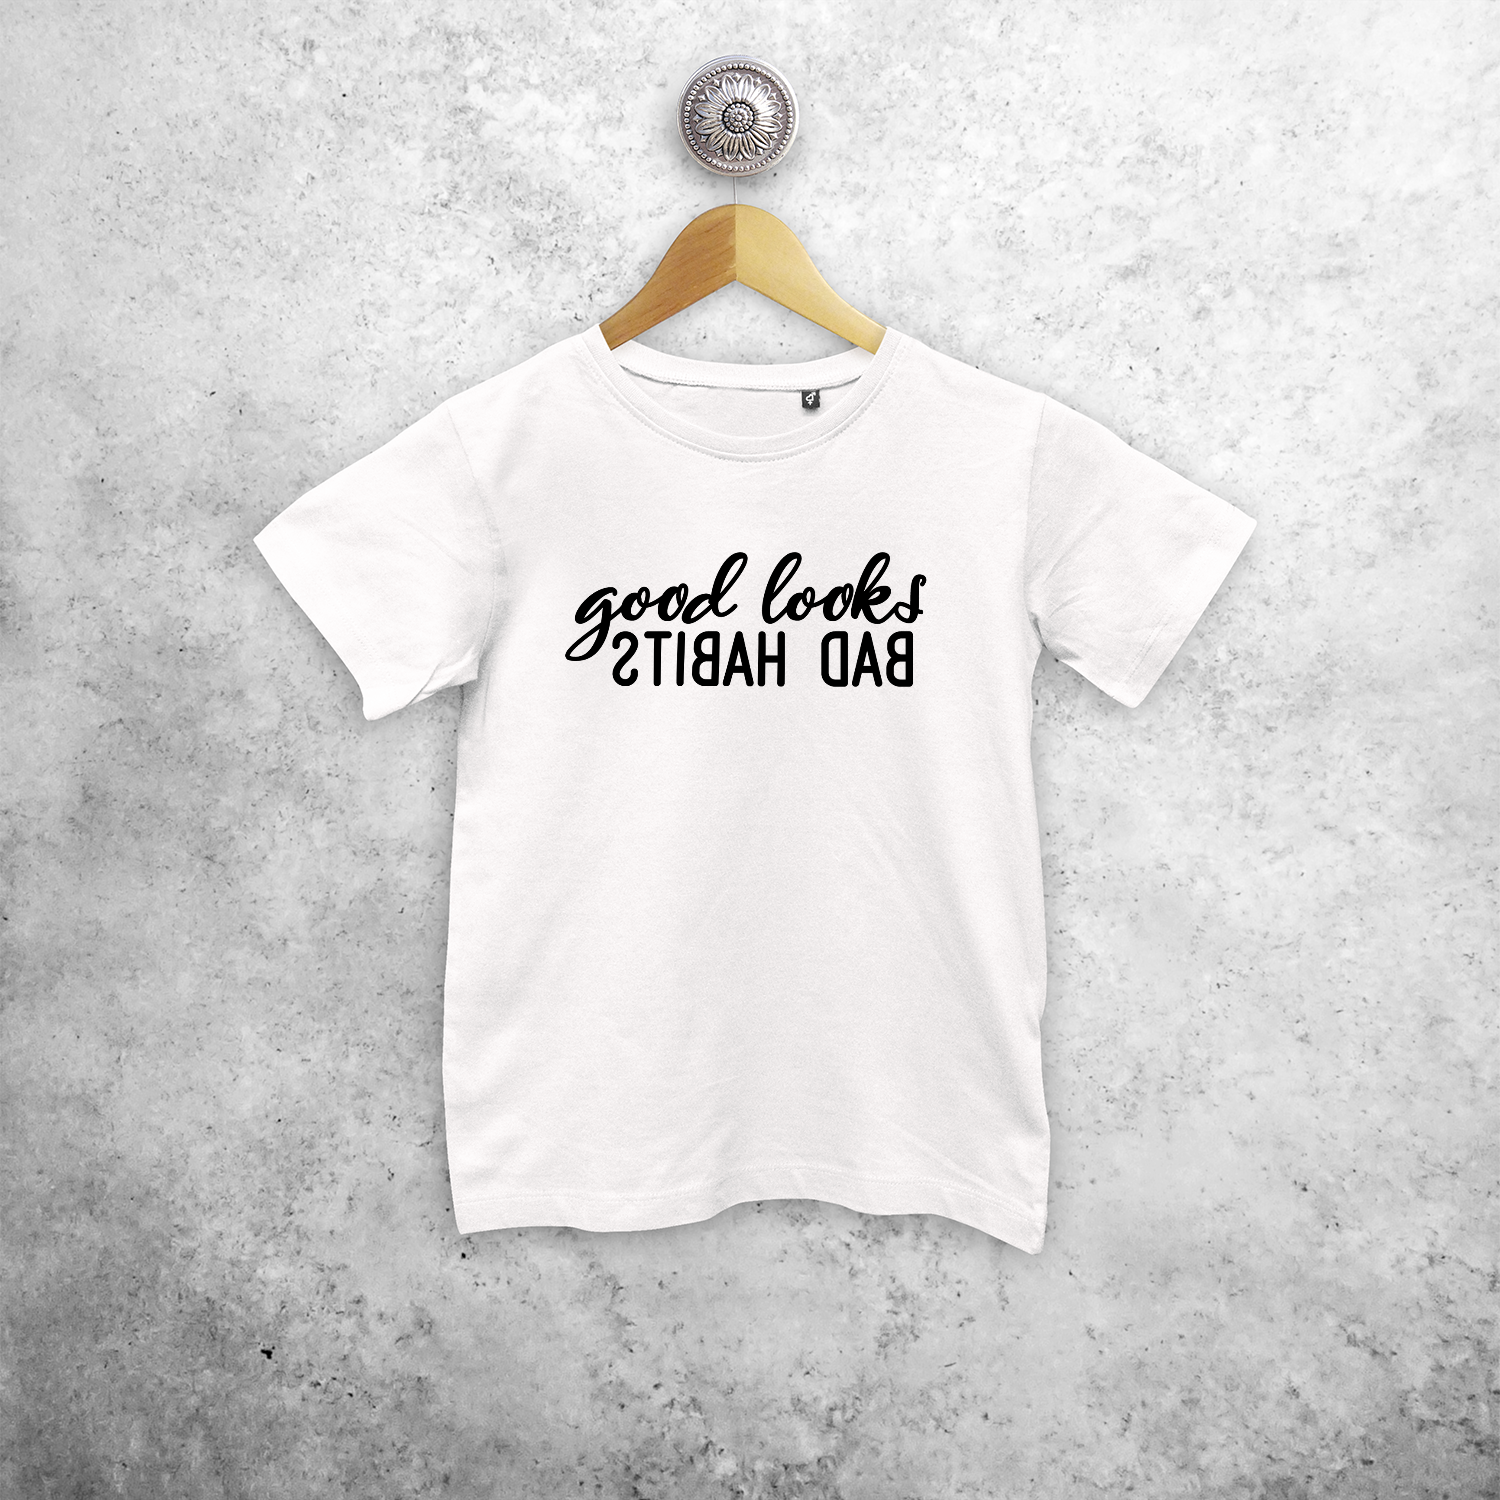 'Good looks - Bad habits' kids shortsleeve shirt